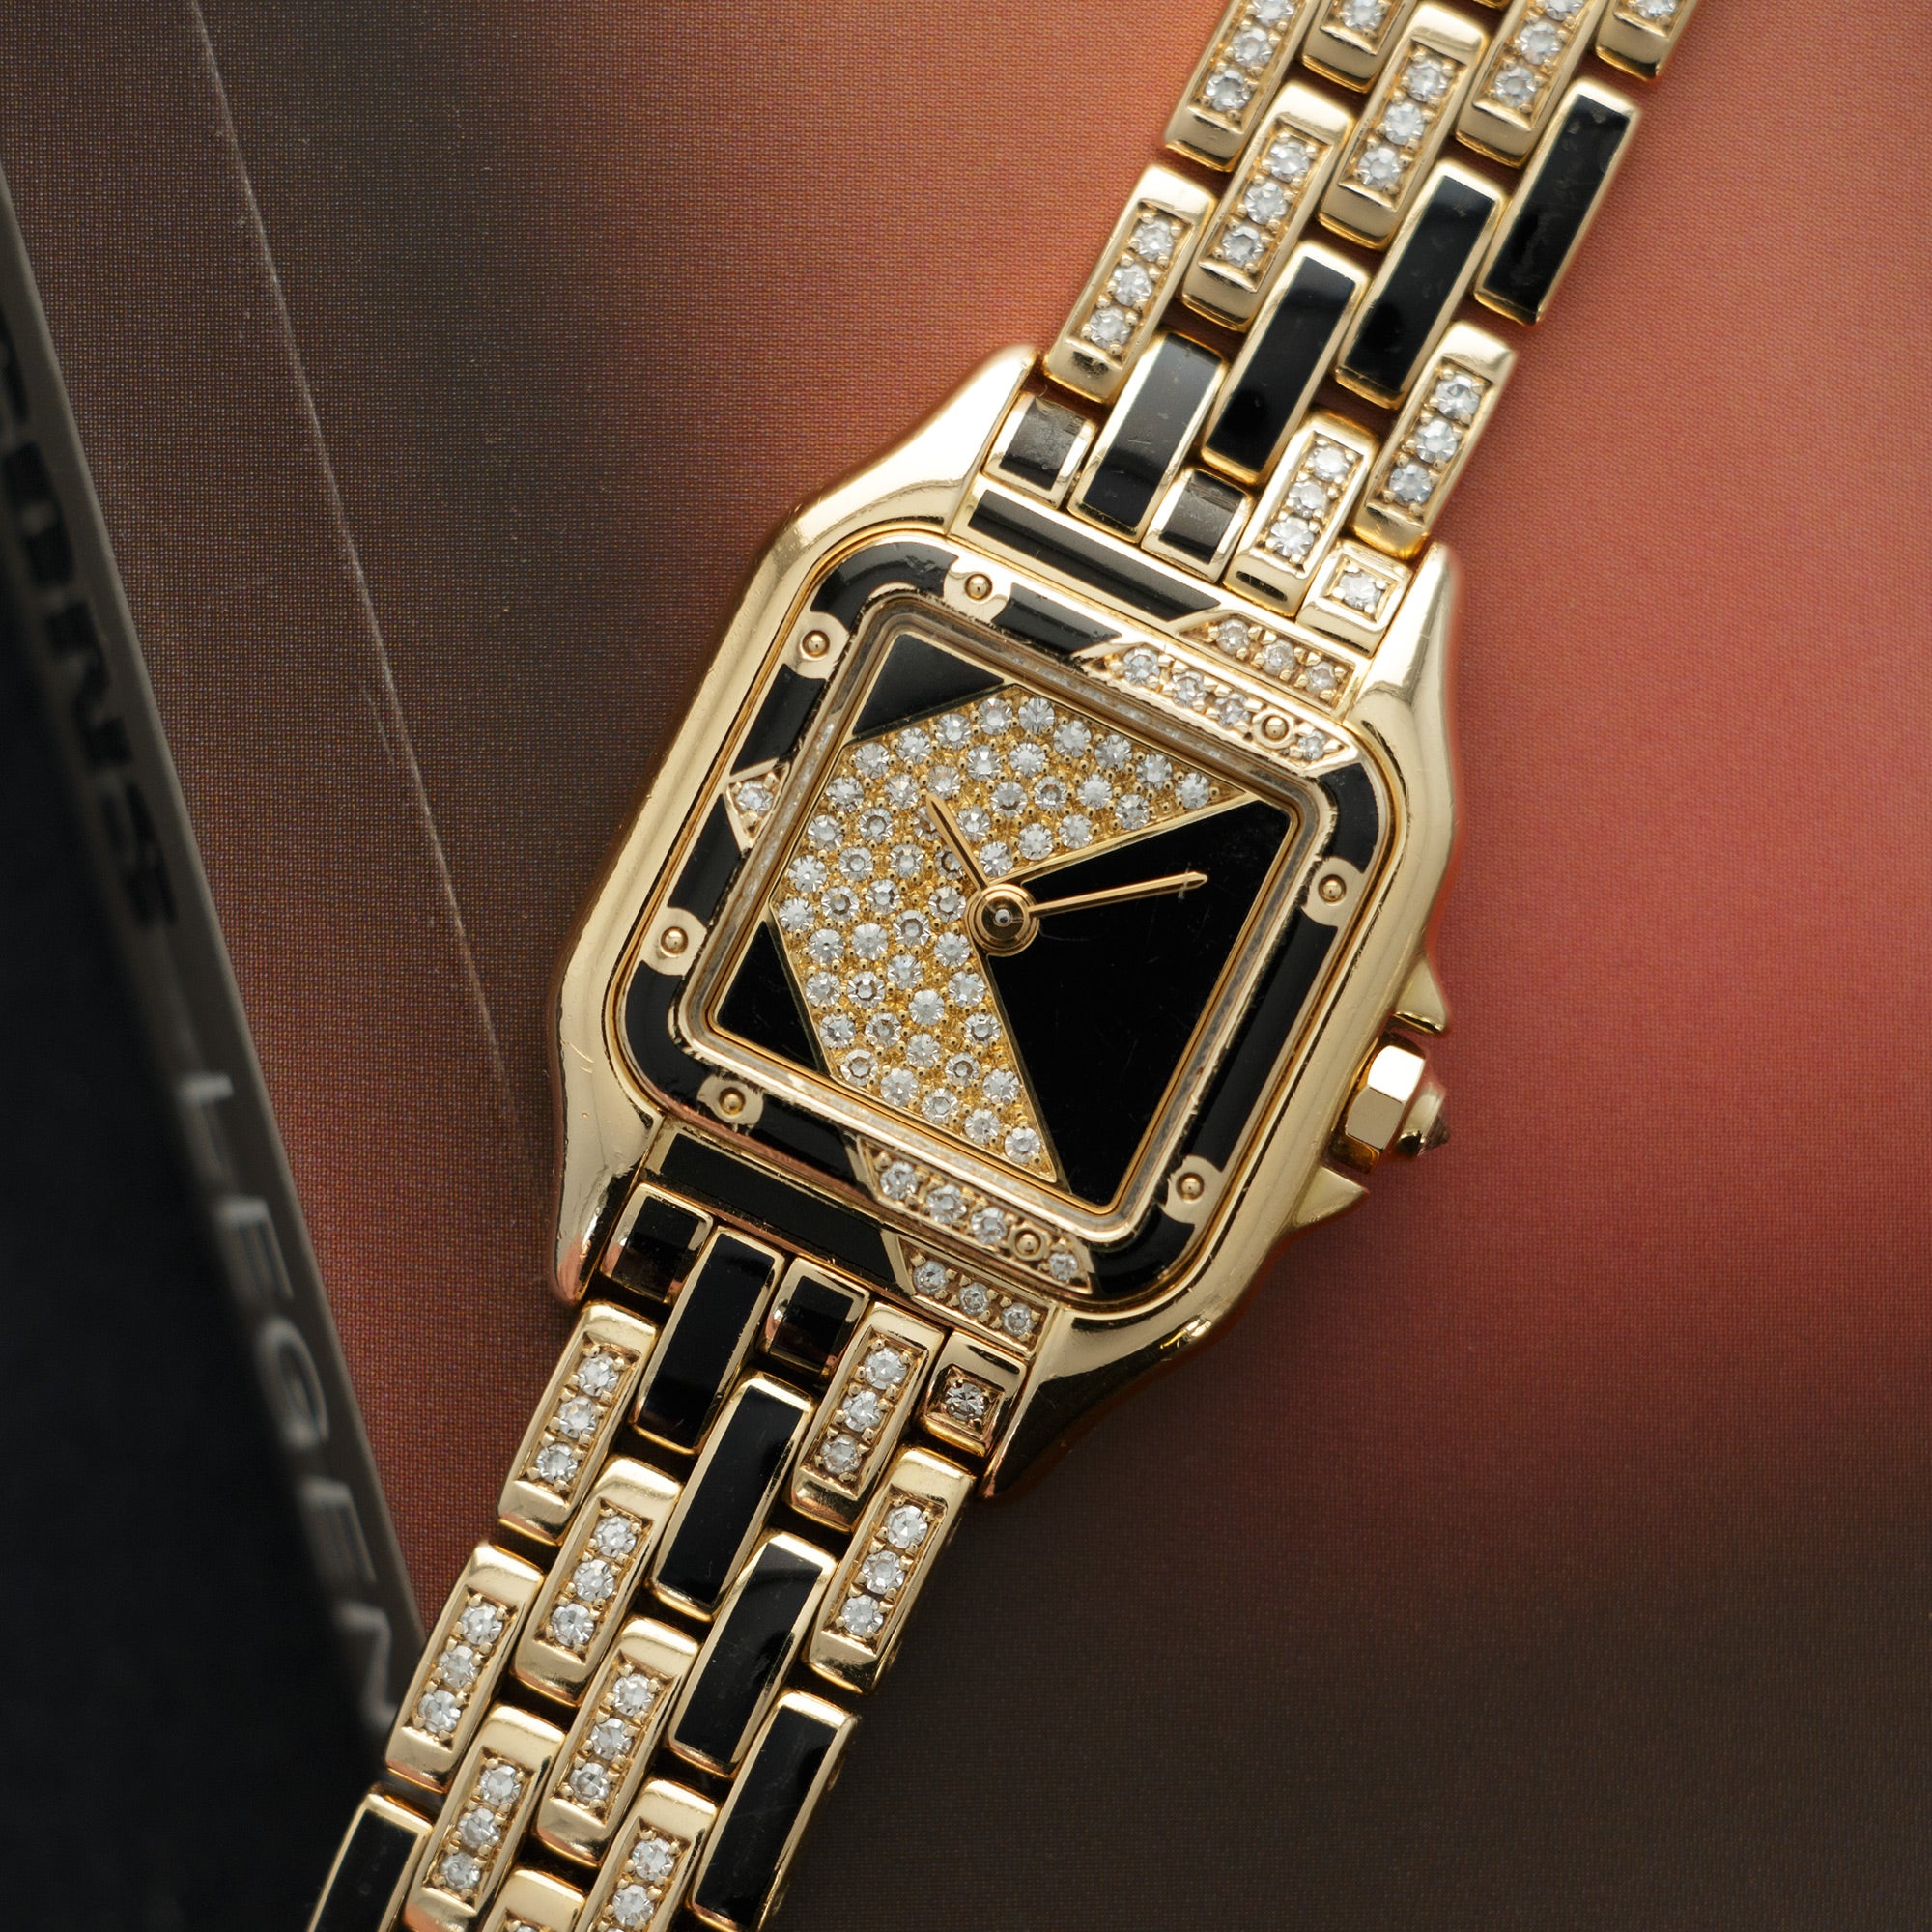 Cartier - Cartier Yellow Gold Panthere Enamel Diamond Watch - The Keystone Watches